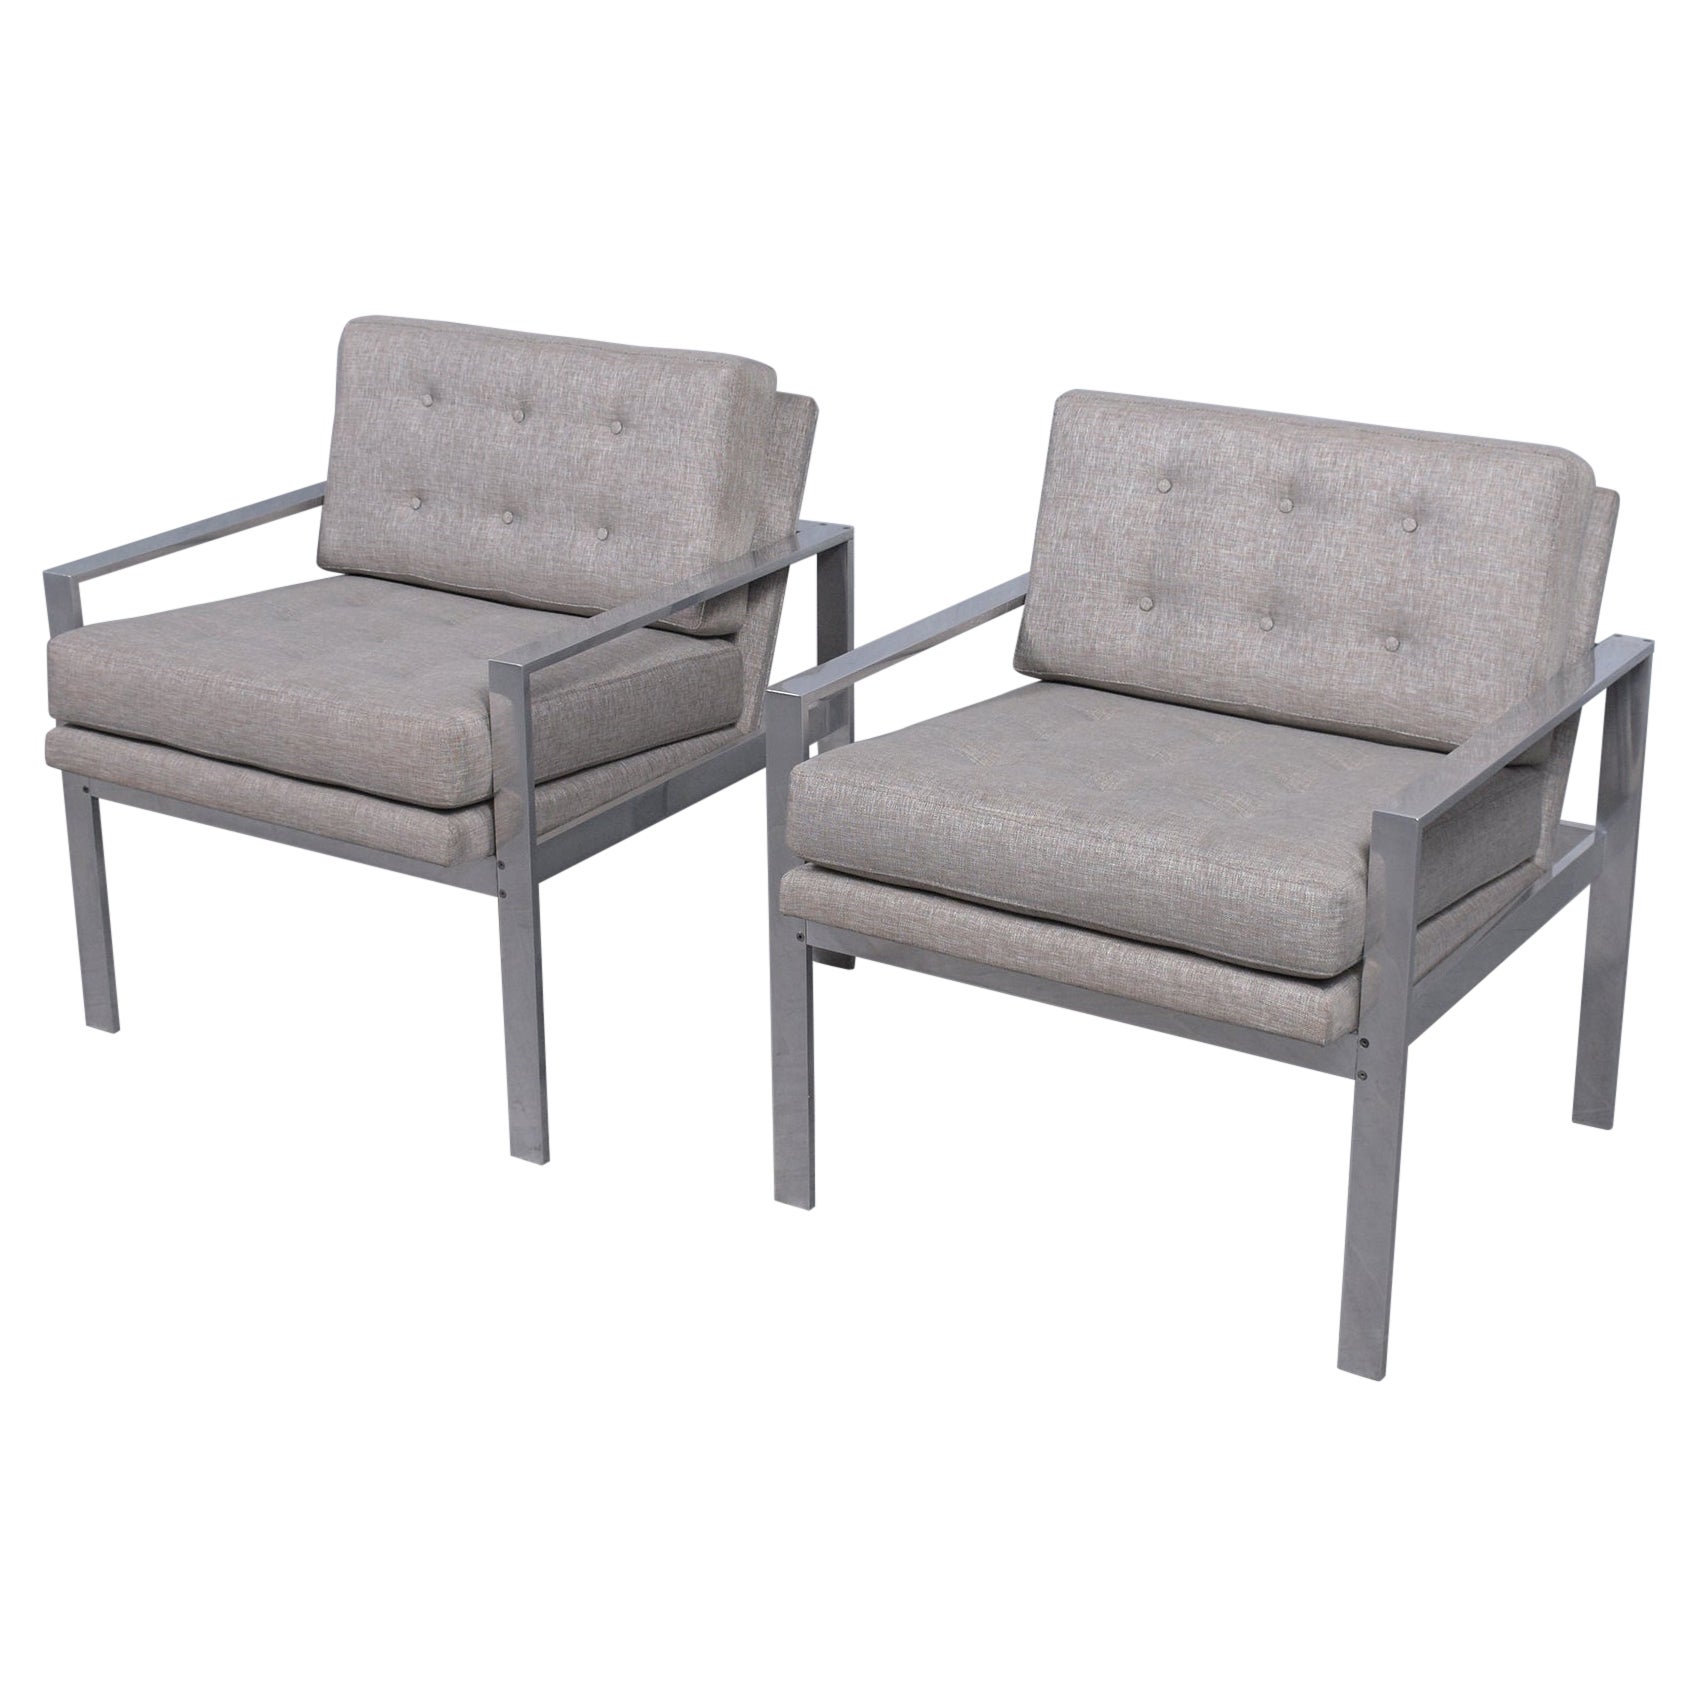 Restored Milo Baughman Lounge Chairs: Mid-Century Elegance Meets Modern Comfort For Sale